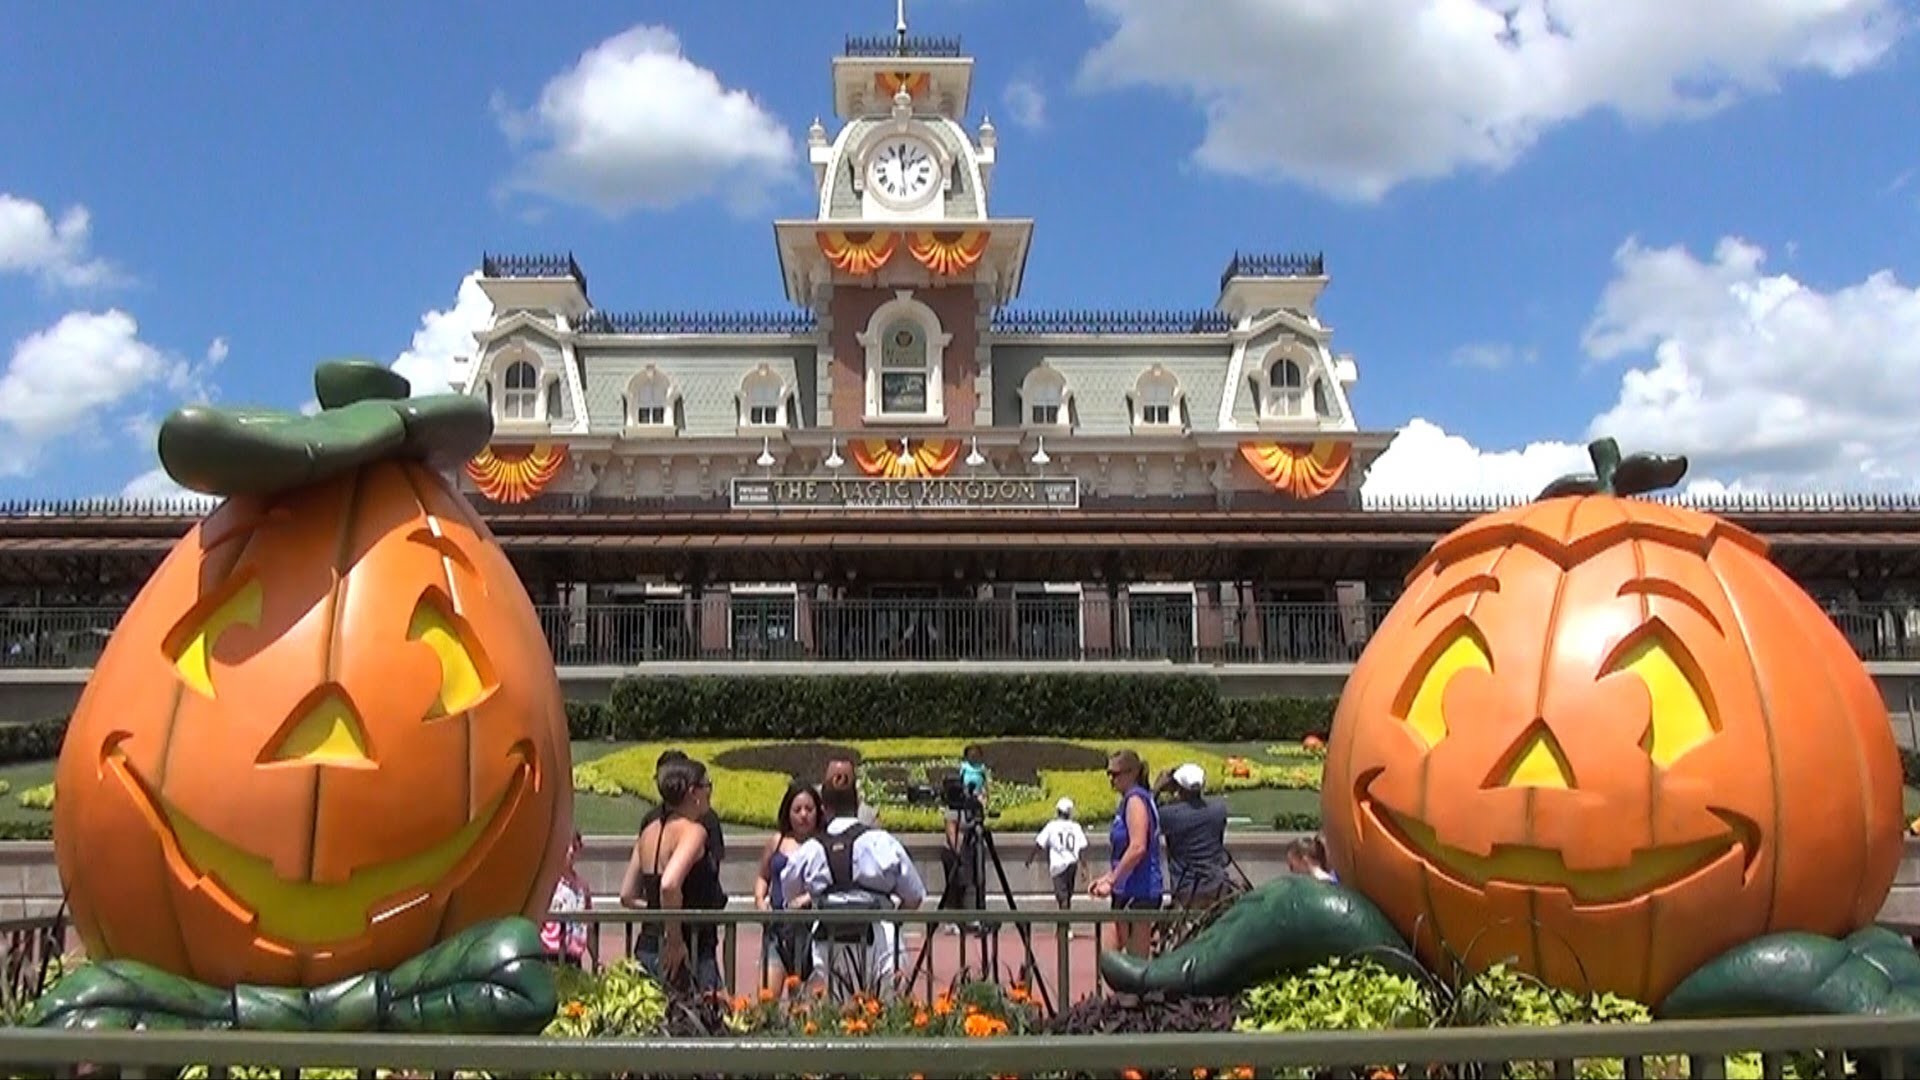 1920x1080 Halloween Decorations at Magic Kingdom 2014 - Jack-O-Lanterns, Pumpkins,  Scarecrows, New Locations - YouTube